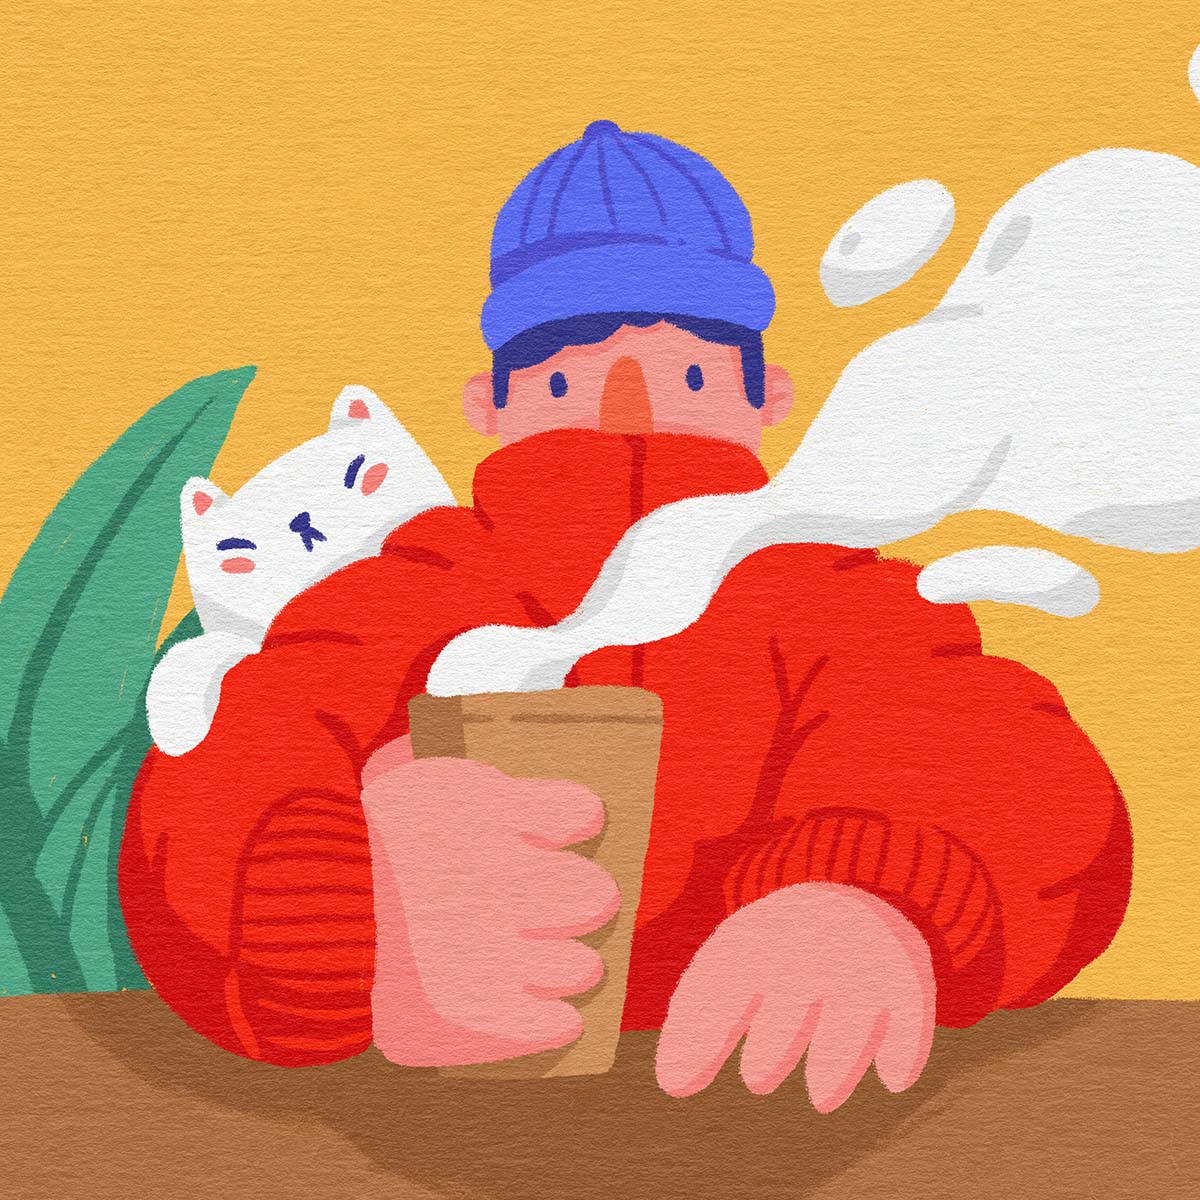 coffee warmth